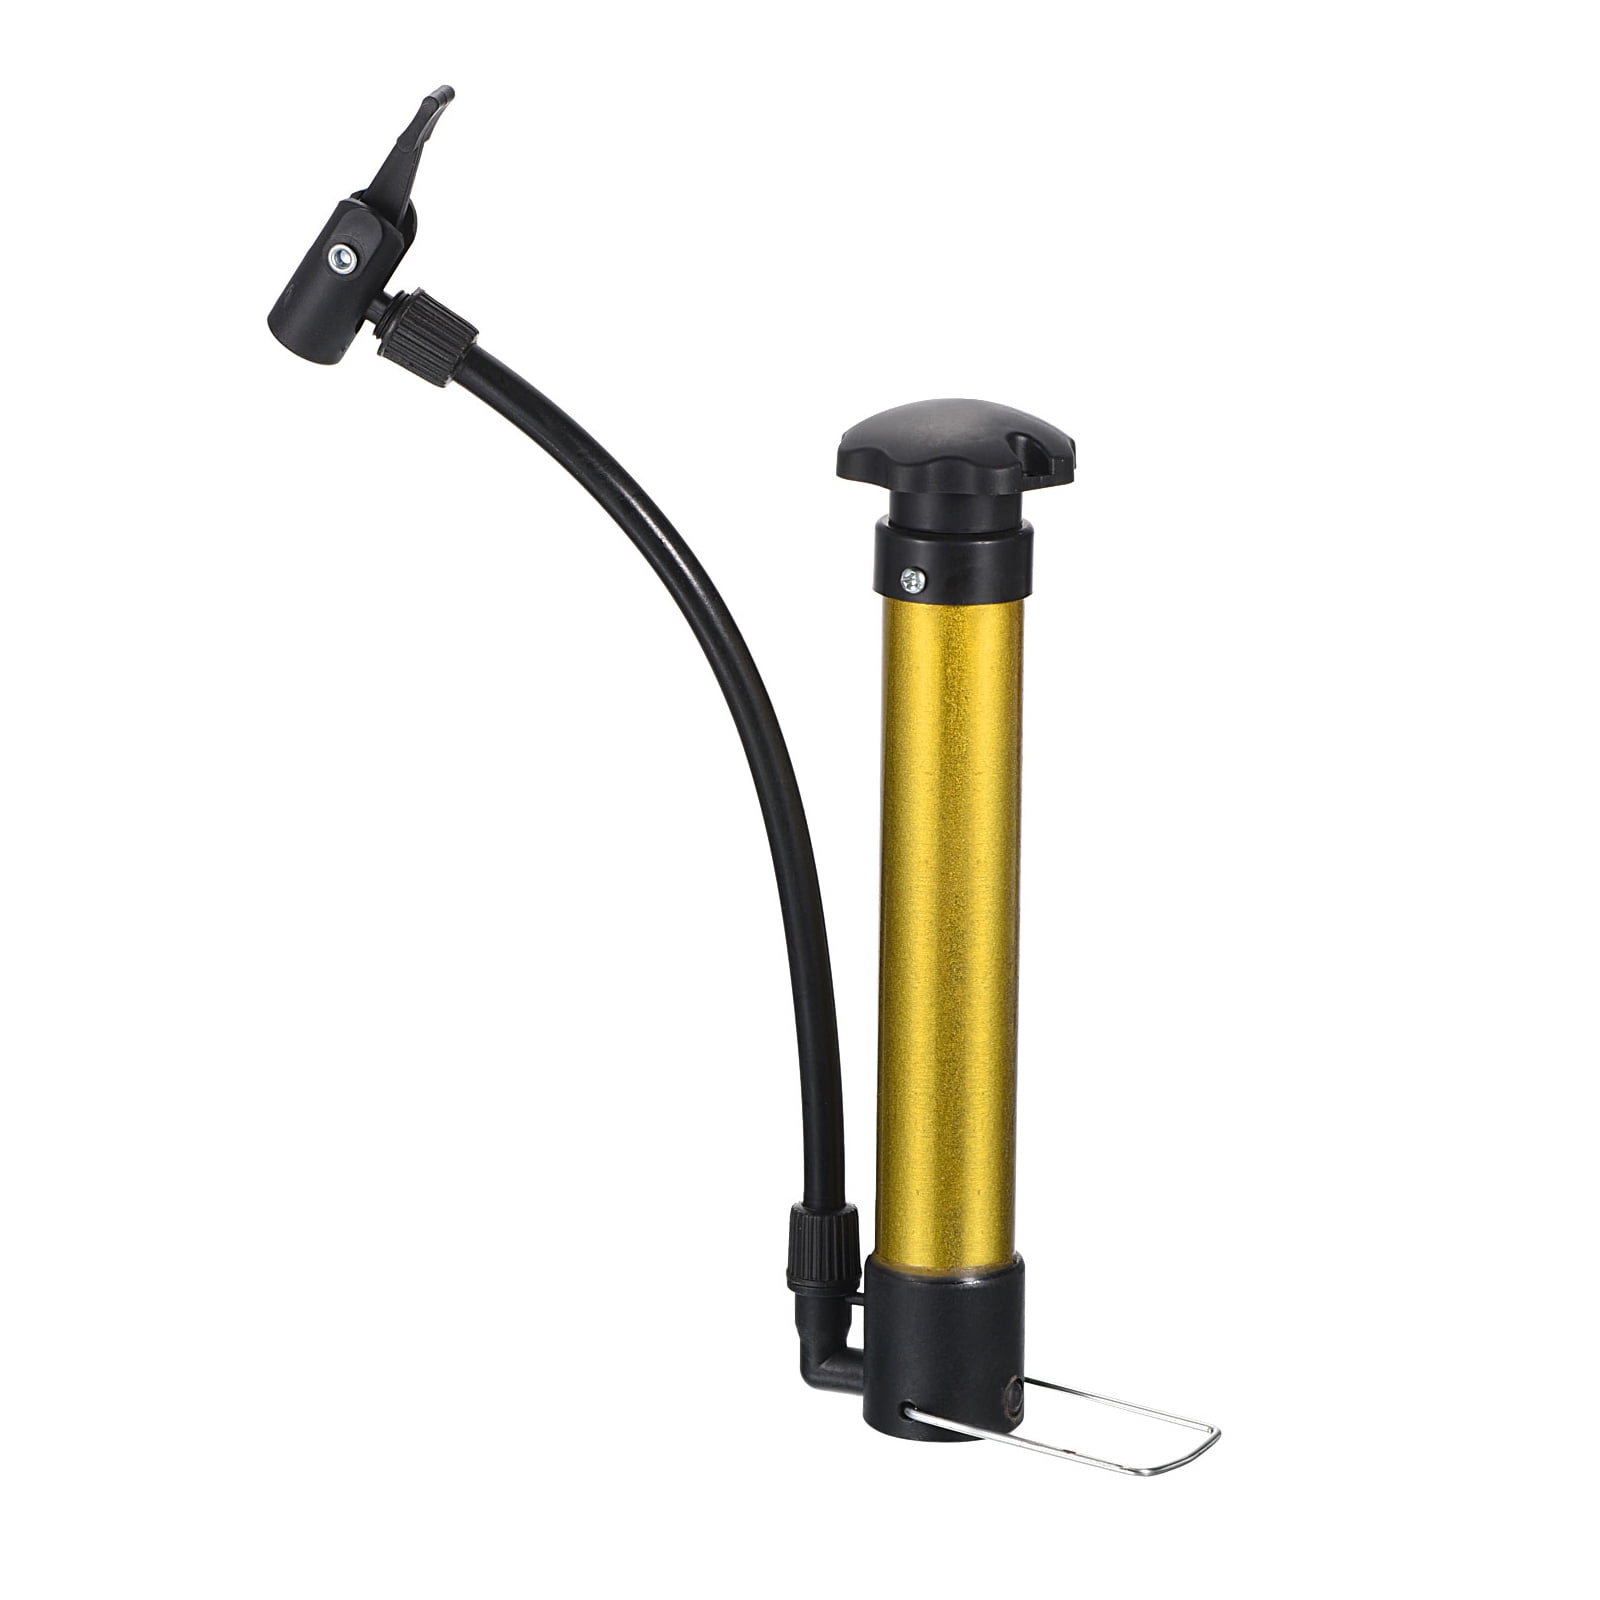  VIMILOLO Bike Floor Pump,Portable Ball Pump Inflator